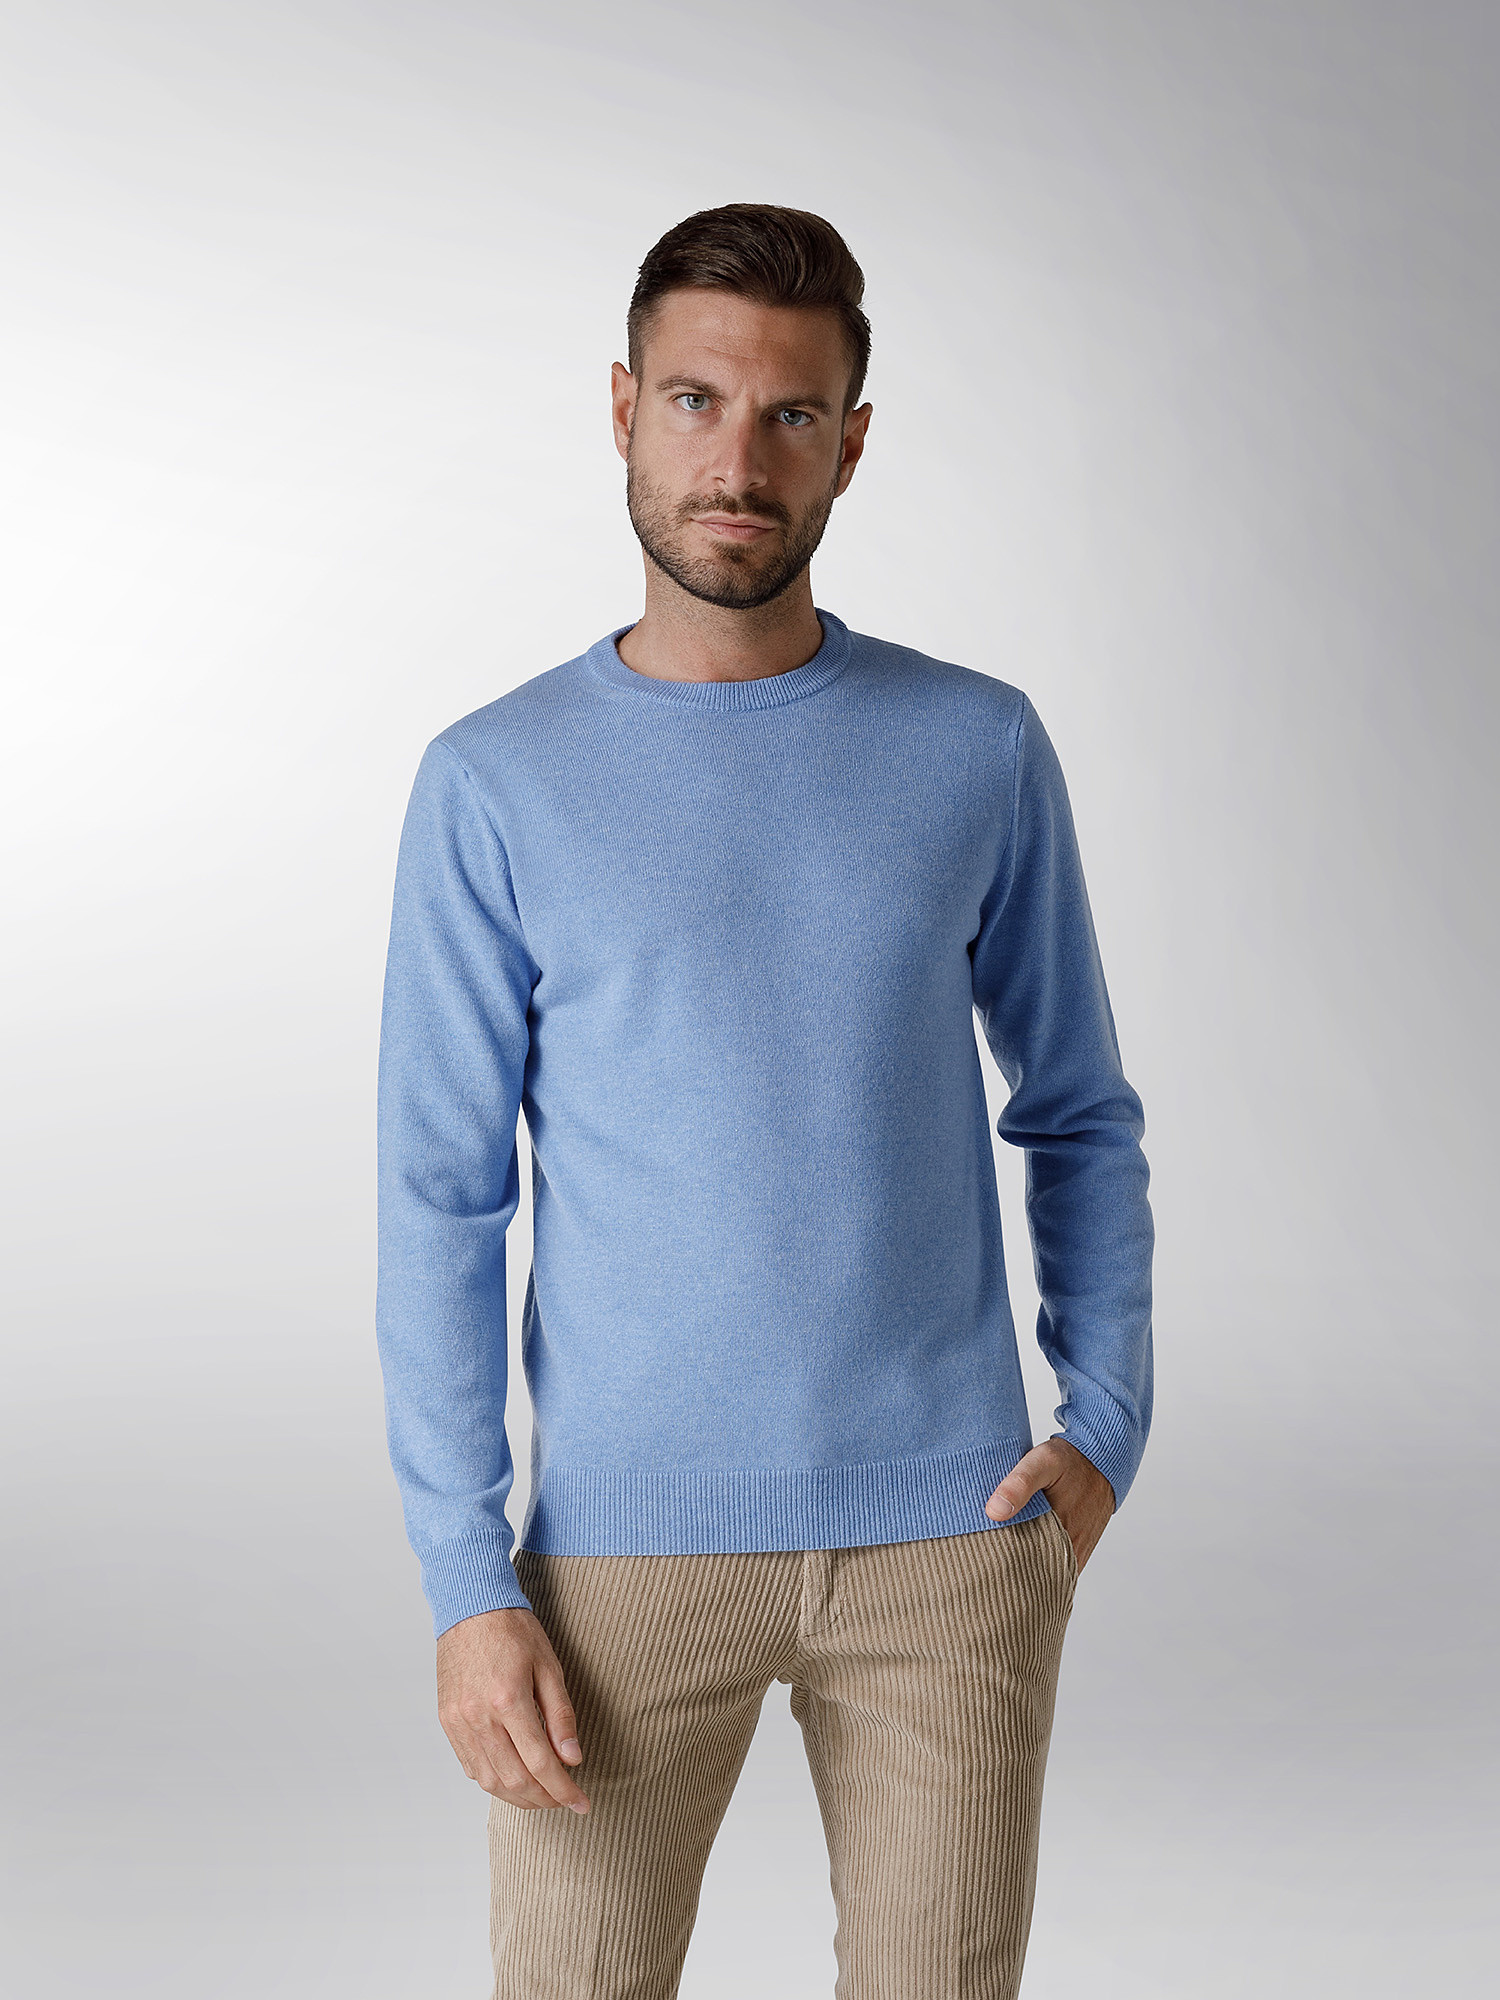 Coin Cashmere - Crewneck sweater in pure cashmere, Blue Celeste, large image number 1